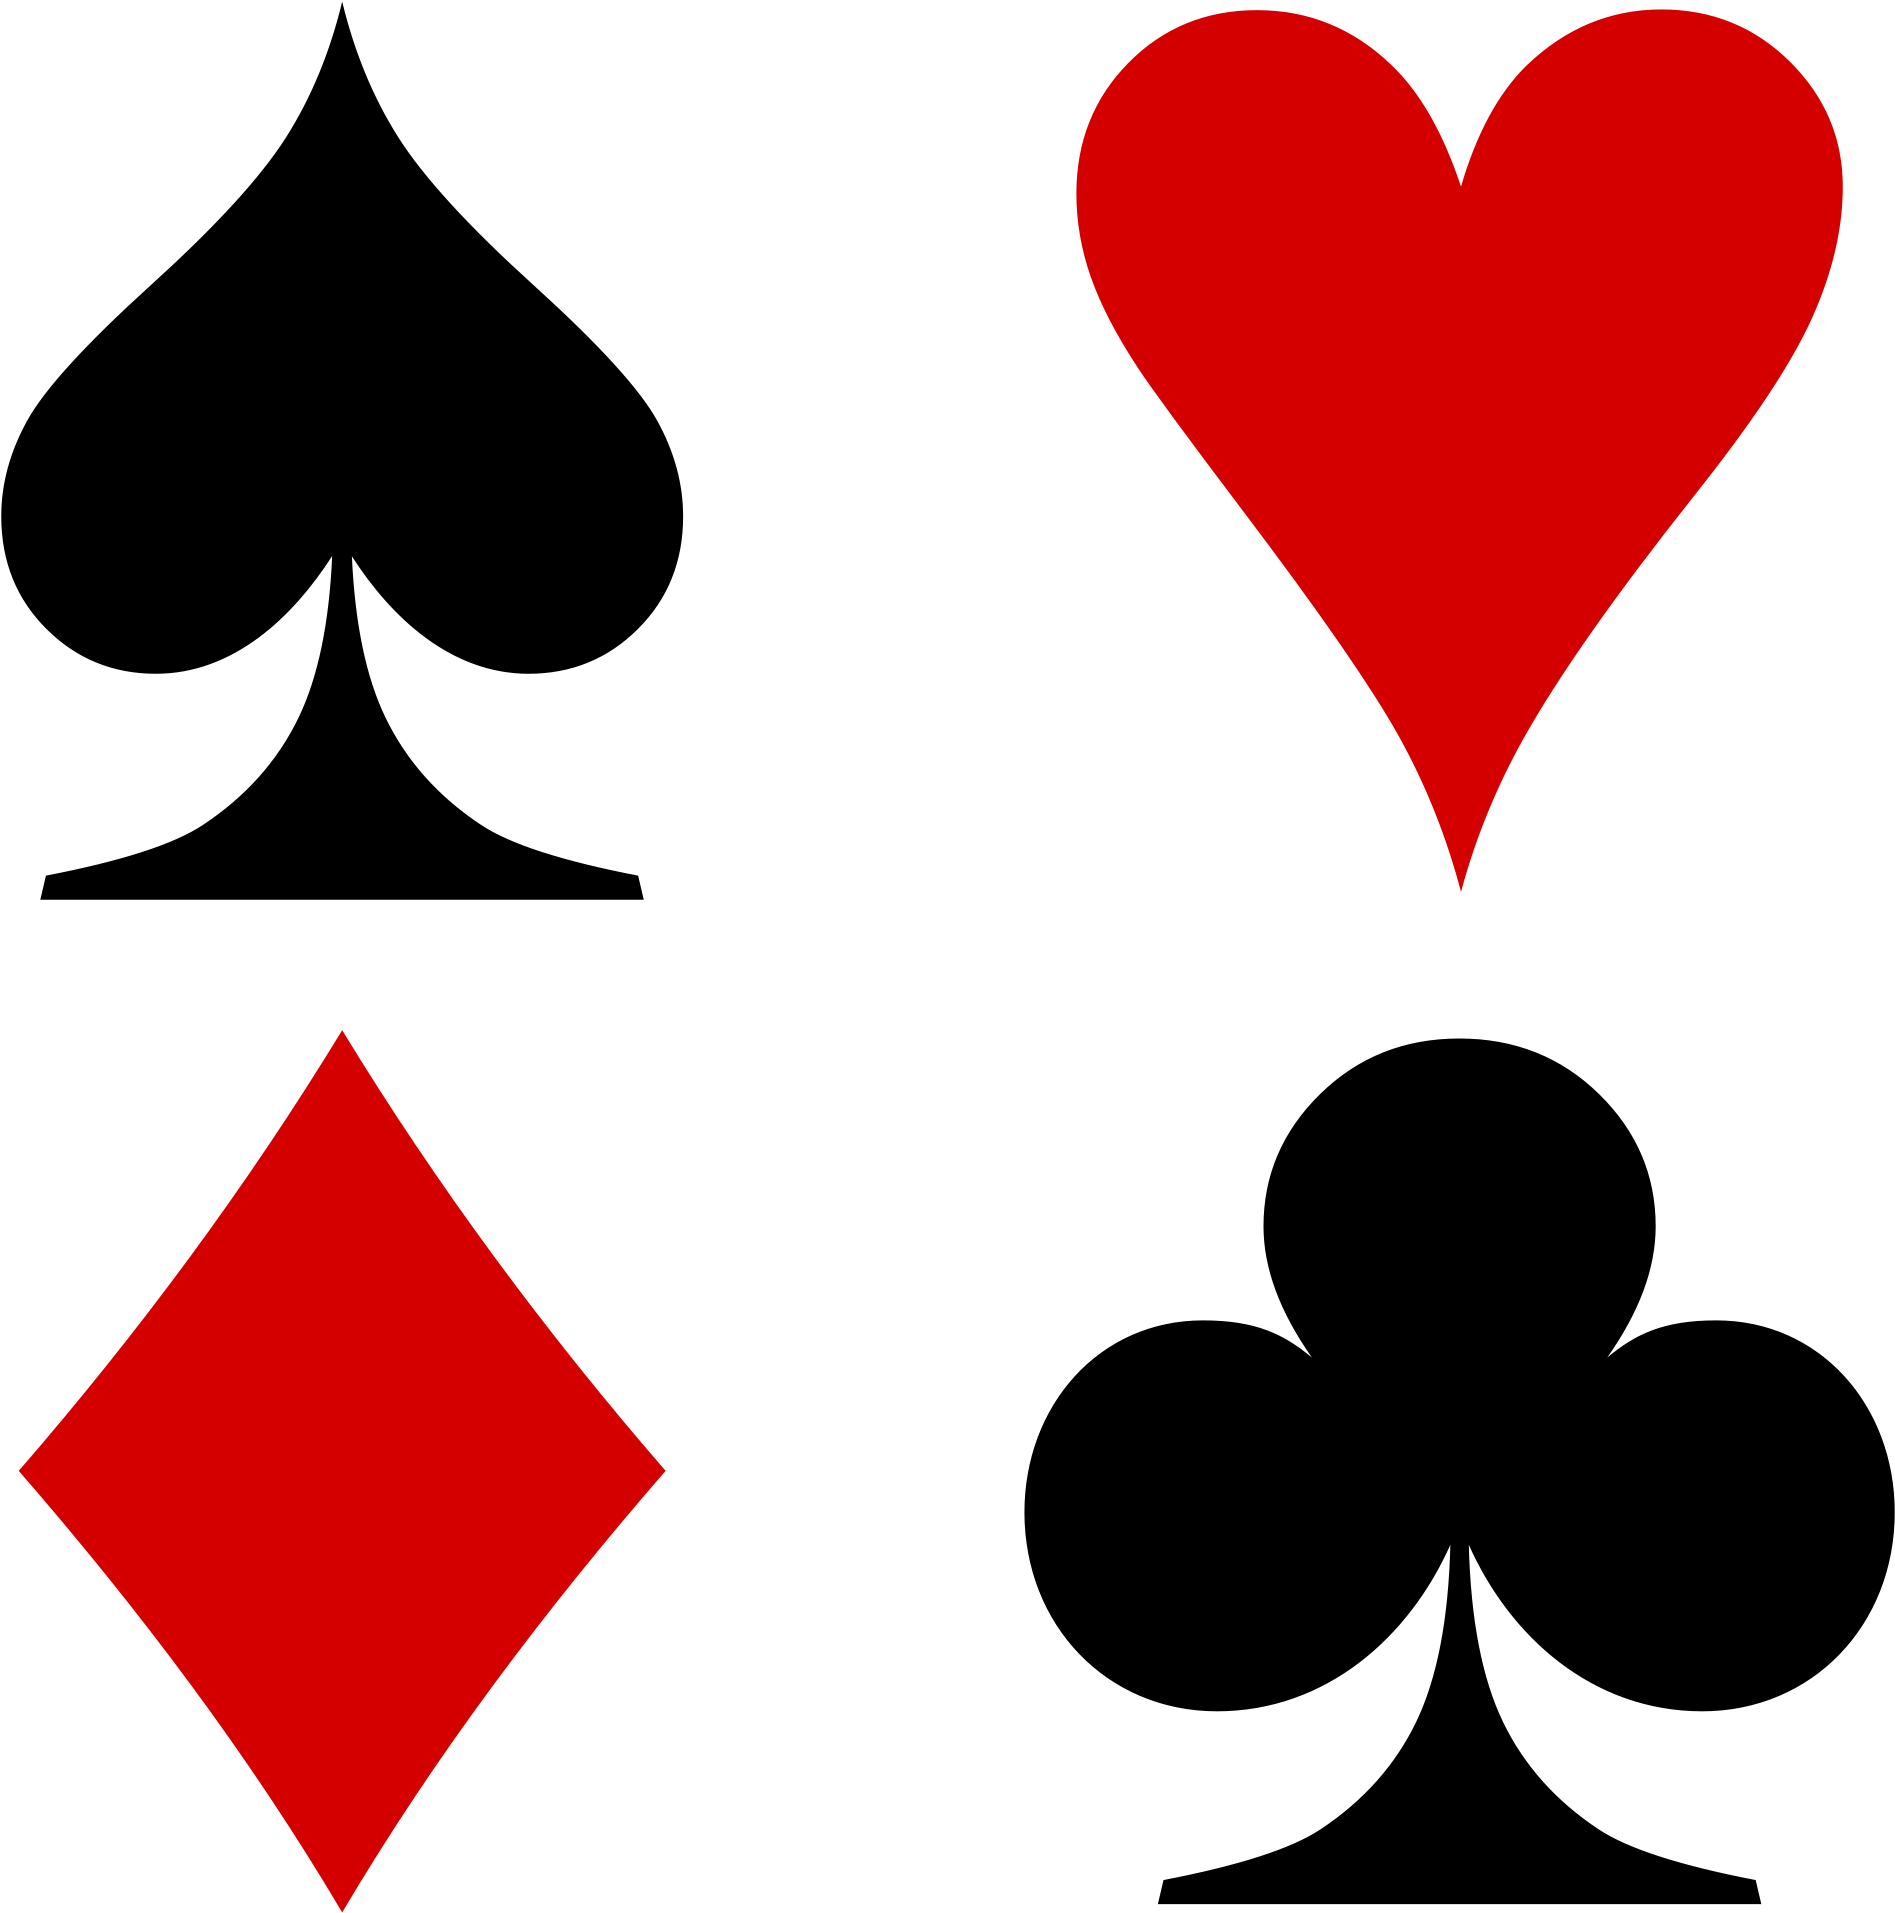 Suit - Heart Diamond Spade Club (2000x2000)